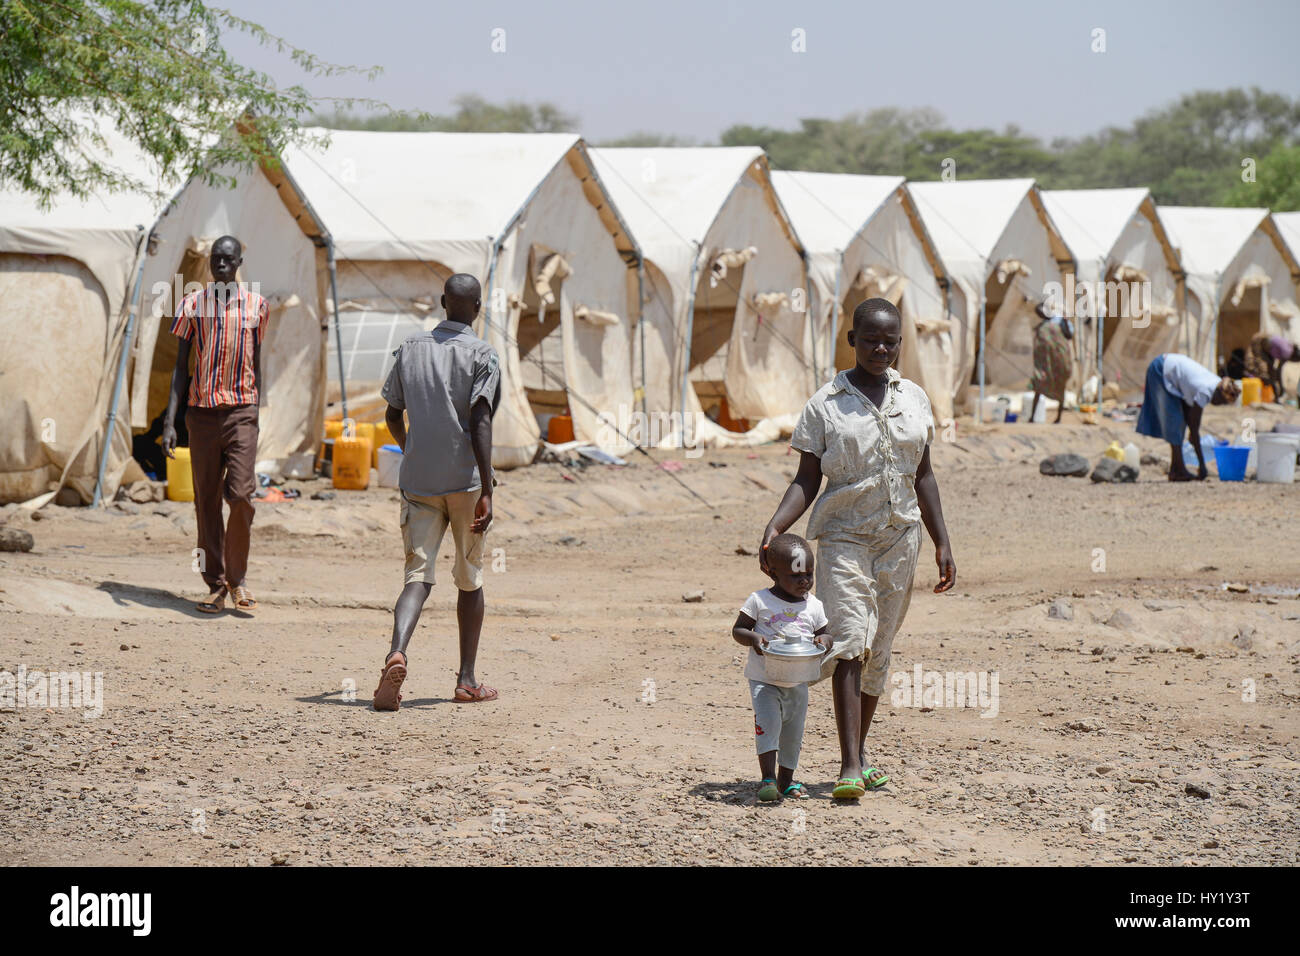 Kenia, Turkana, Flüchtling Lager Kakuma für 160,000 Flüchtlinge, Kakuma III Auffanglager für ankommende Süden sudanesische Flüchtlinge / KENIA Turkana, Fluechtlingslager Kakuma Fuer 160.000 Fluechtlinge, Kakuma III, Aufnahme Fuer Fluechtlinge aus Dem Süd-Sudan Stockfoto